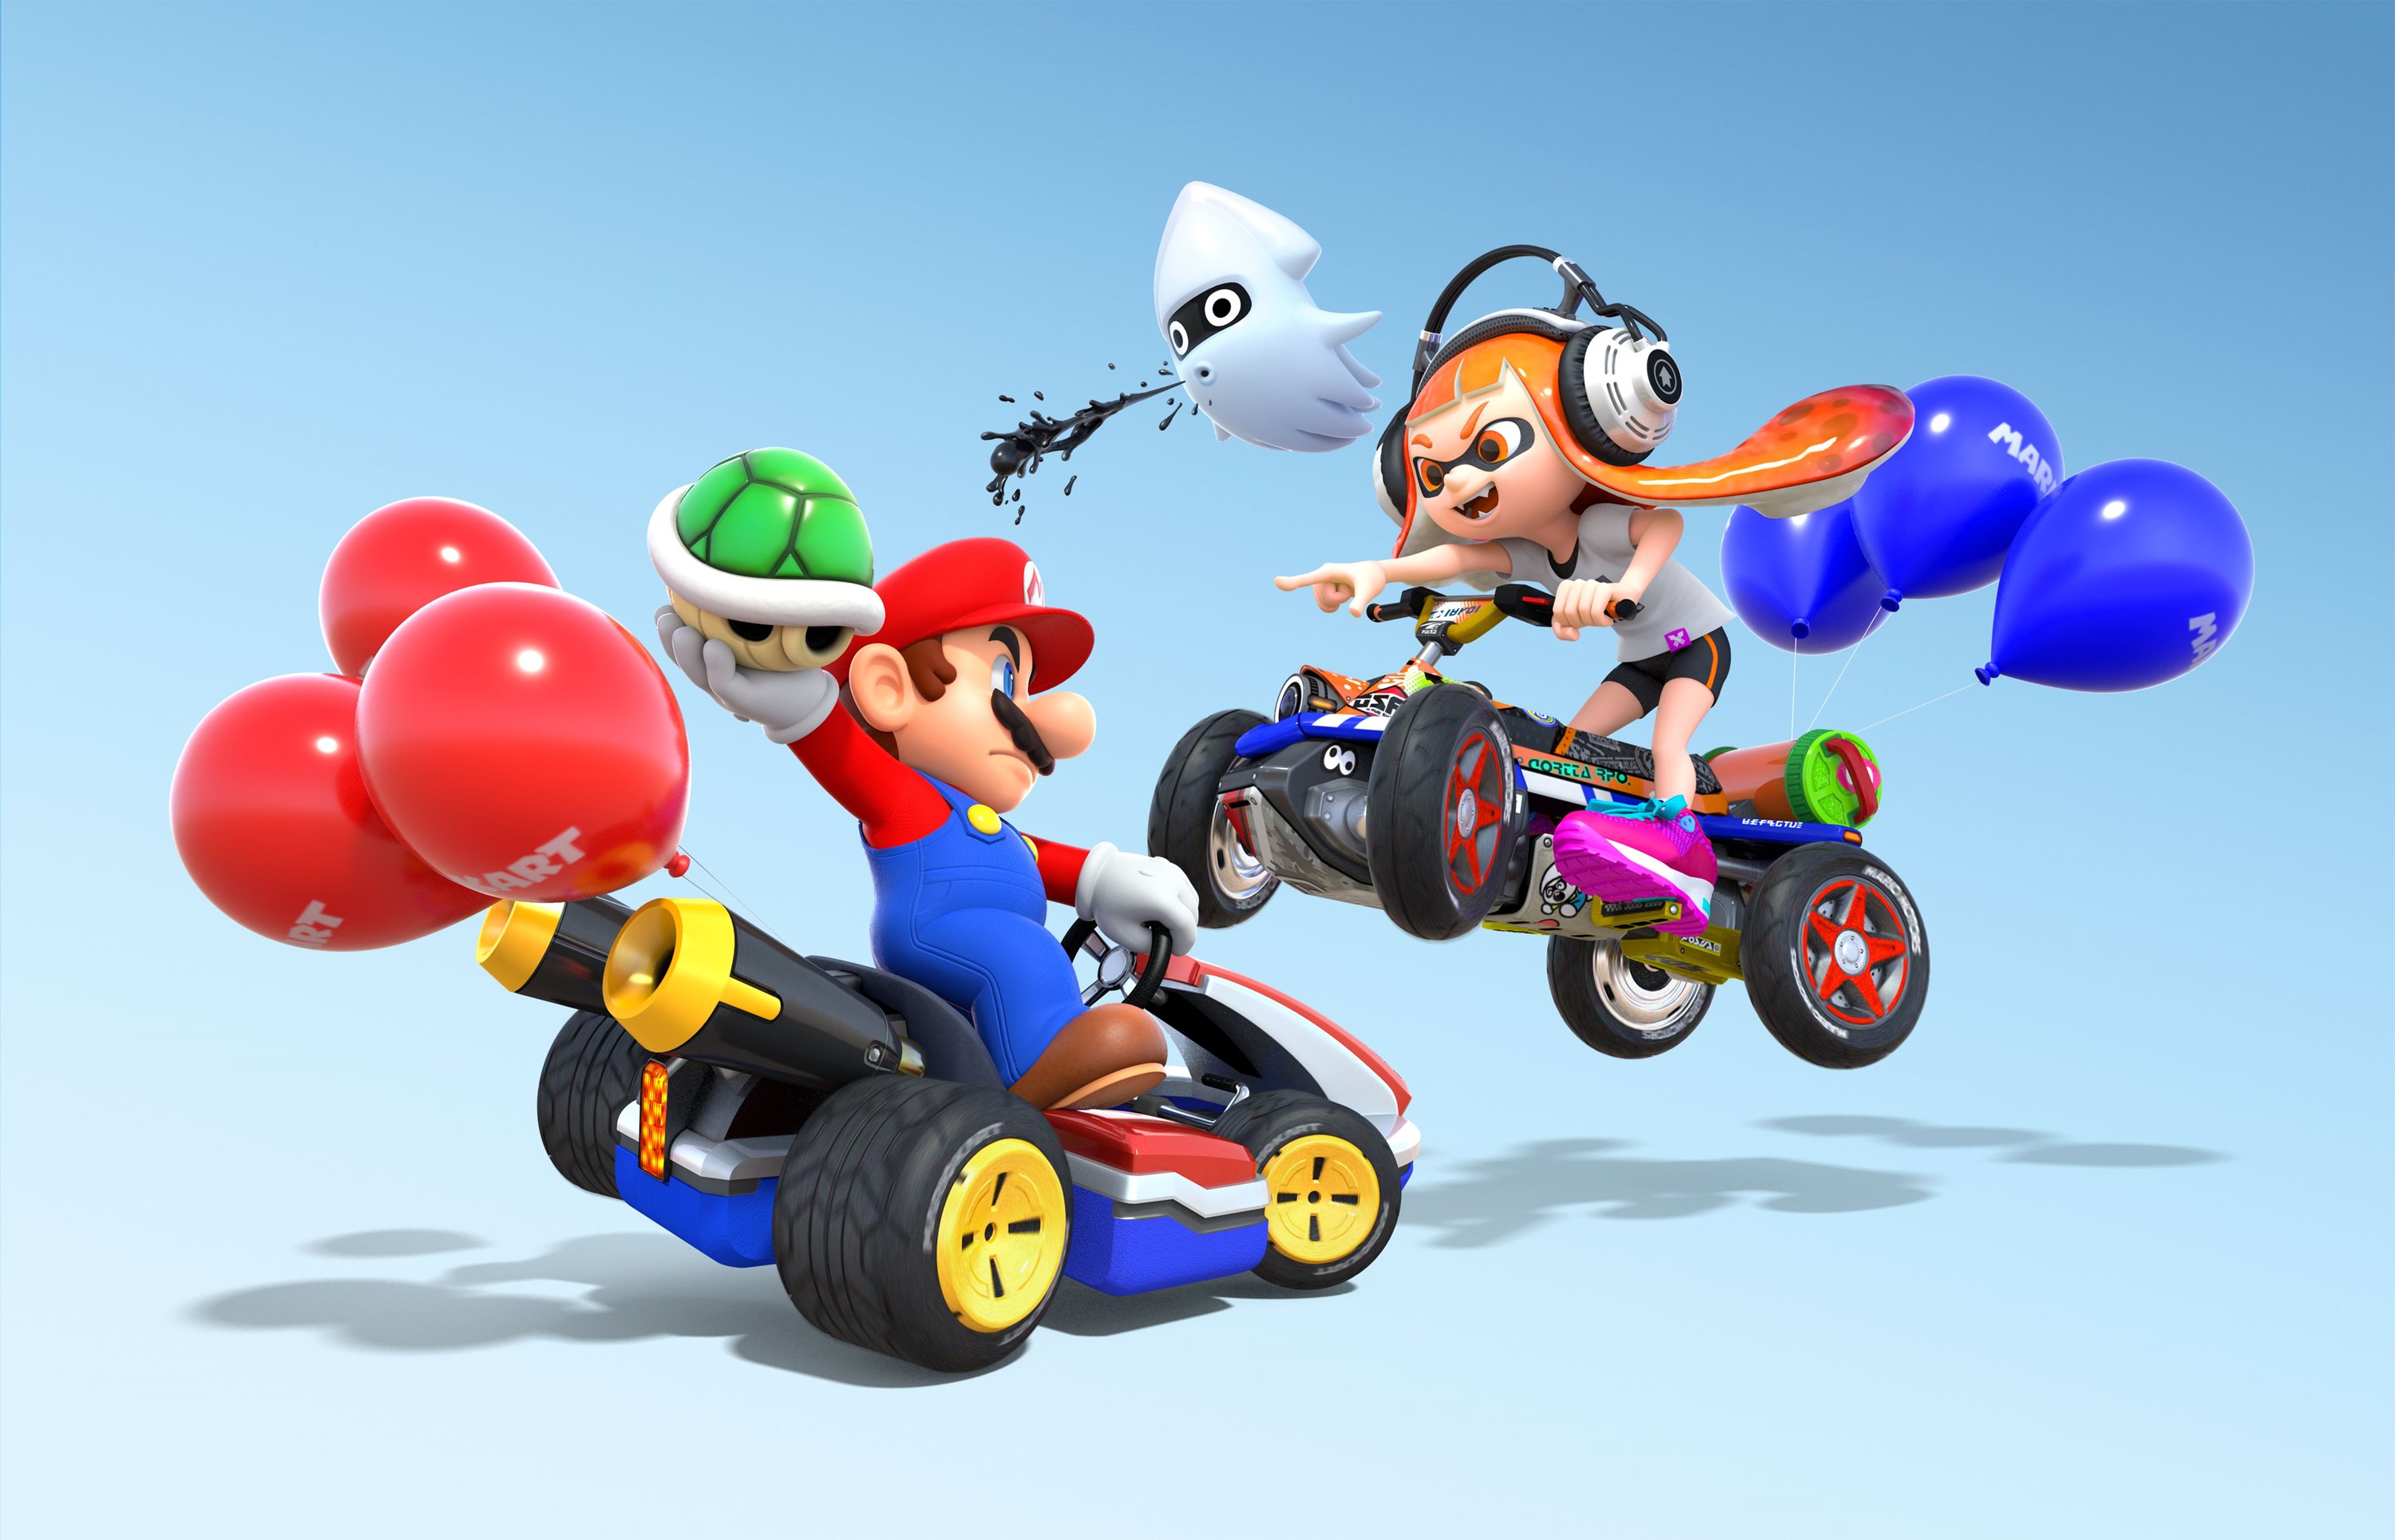 Buy Mario Kart 8 Deluxe Nintendo Switch Game, Nintendo Switch games